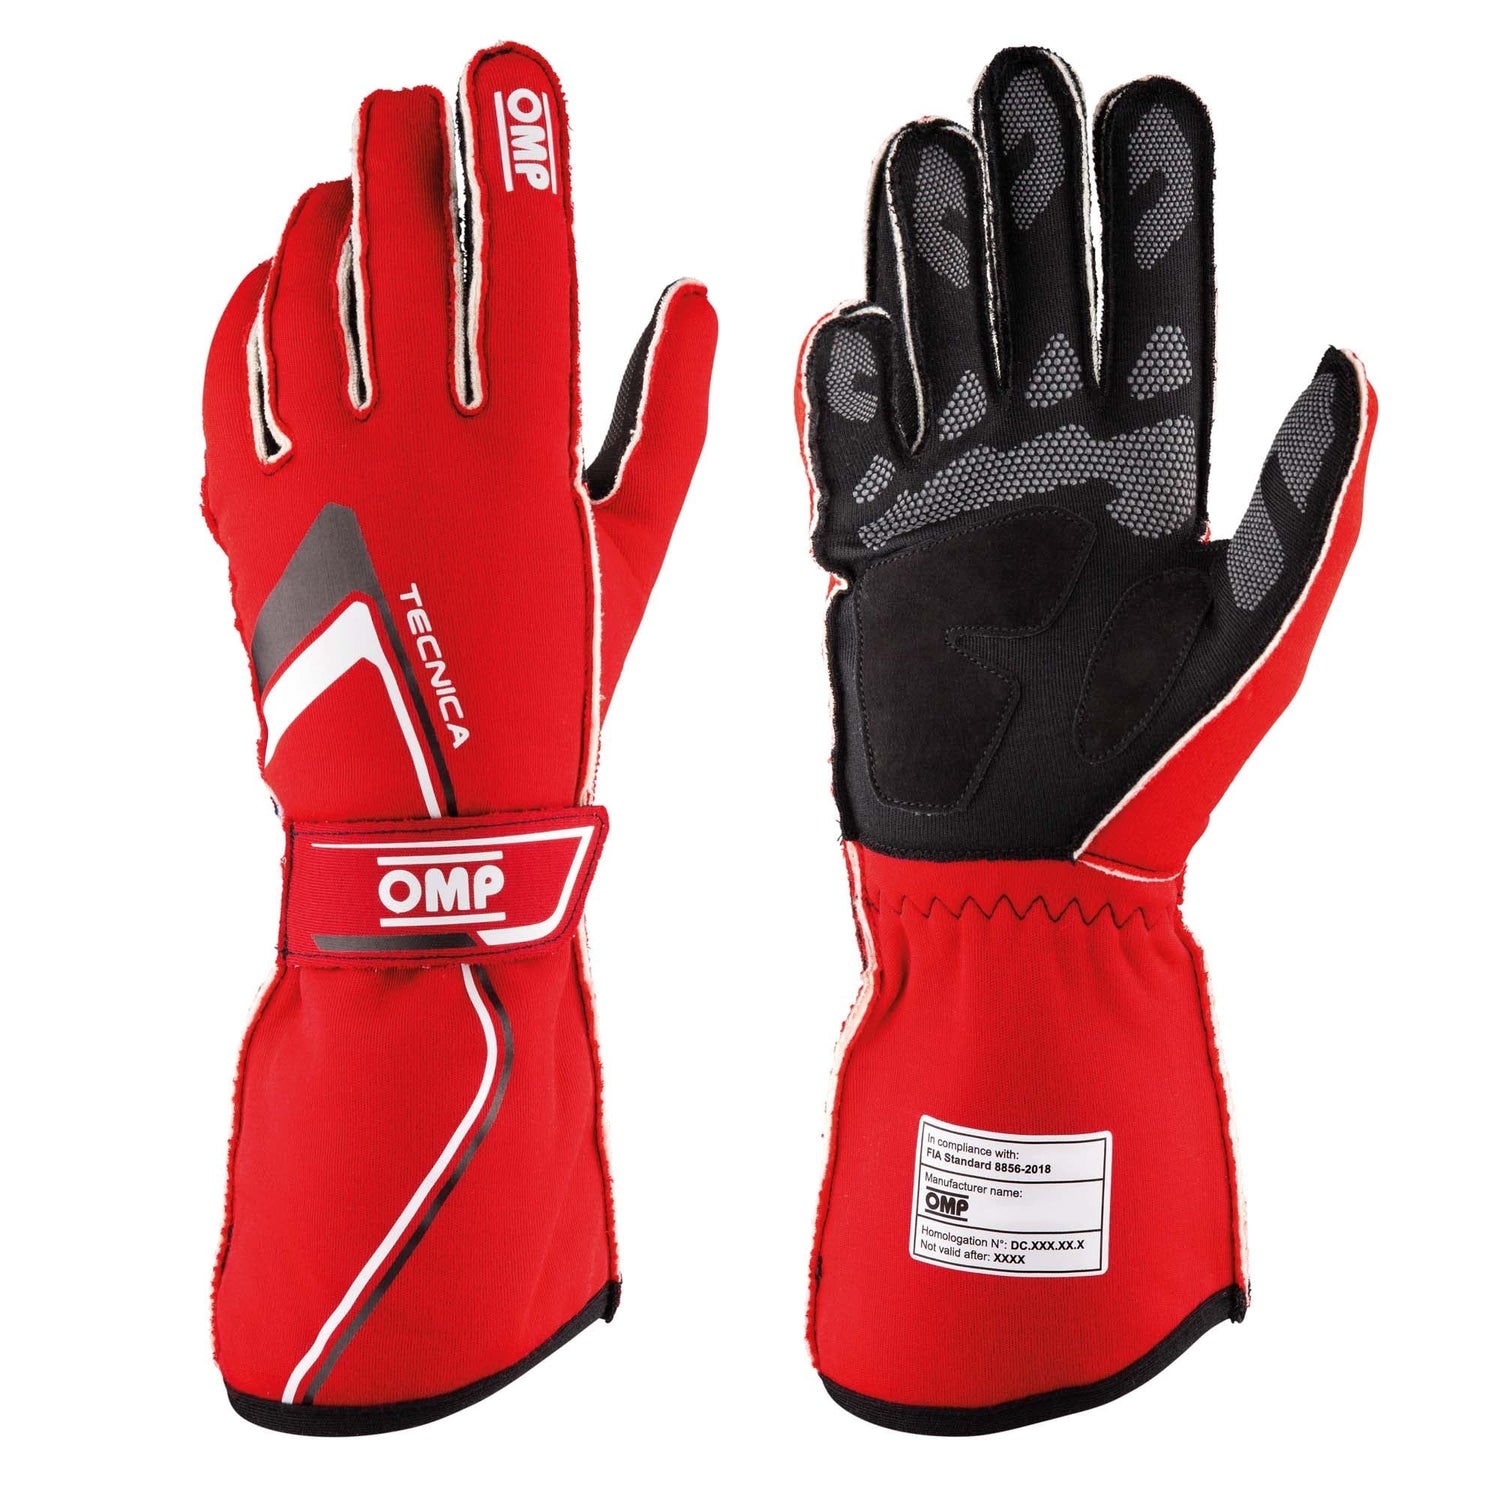 OMP Racing Gloves